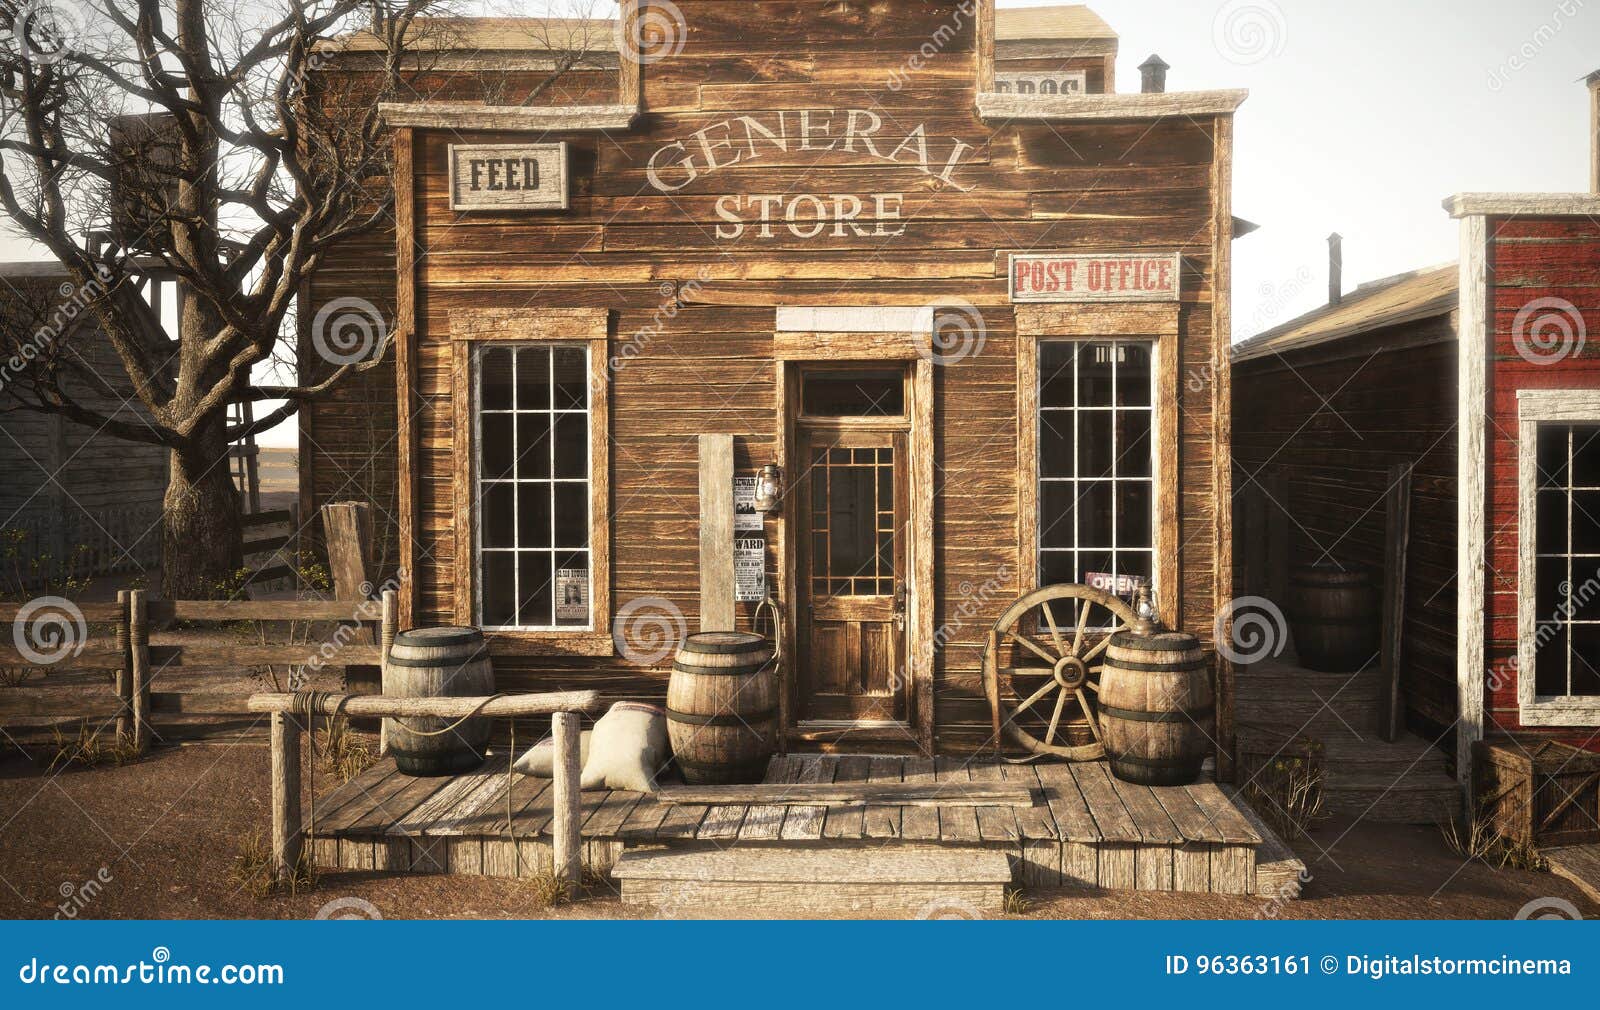 western town rustic general store.